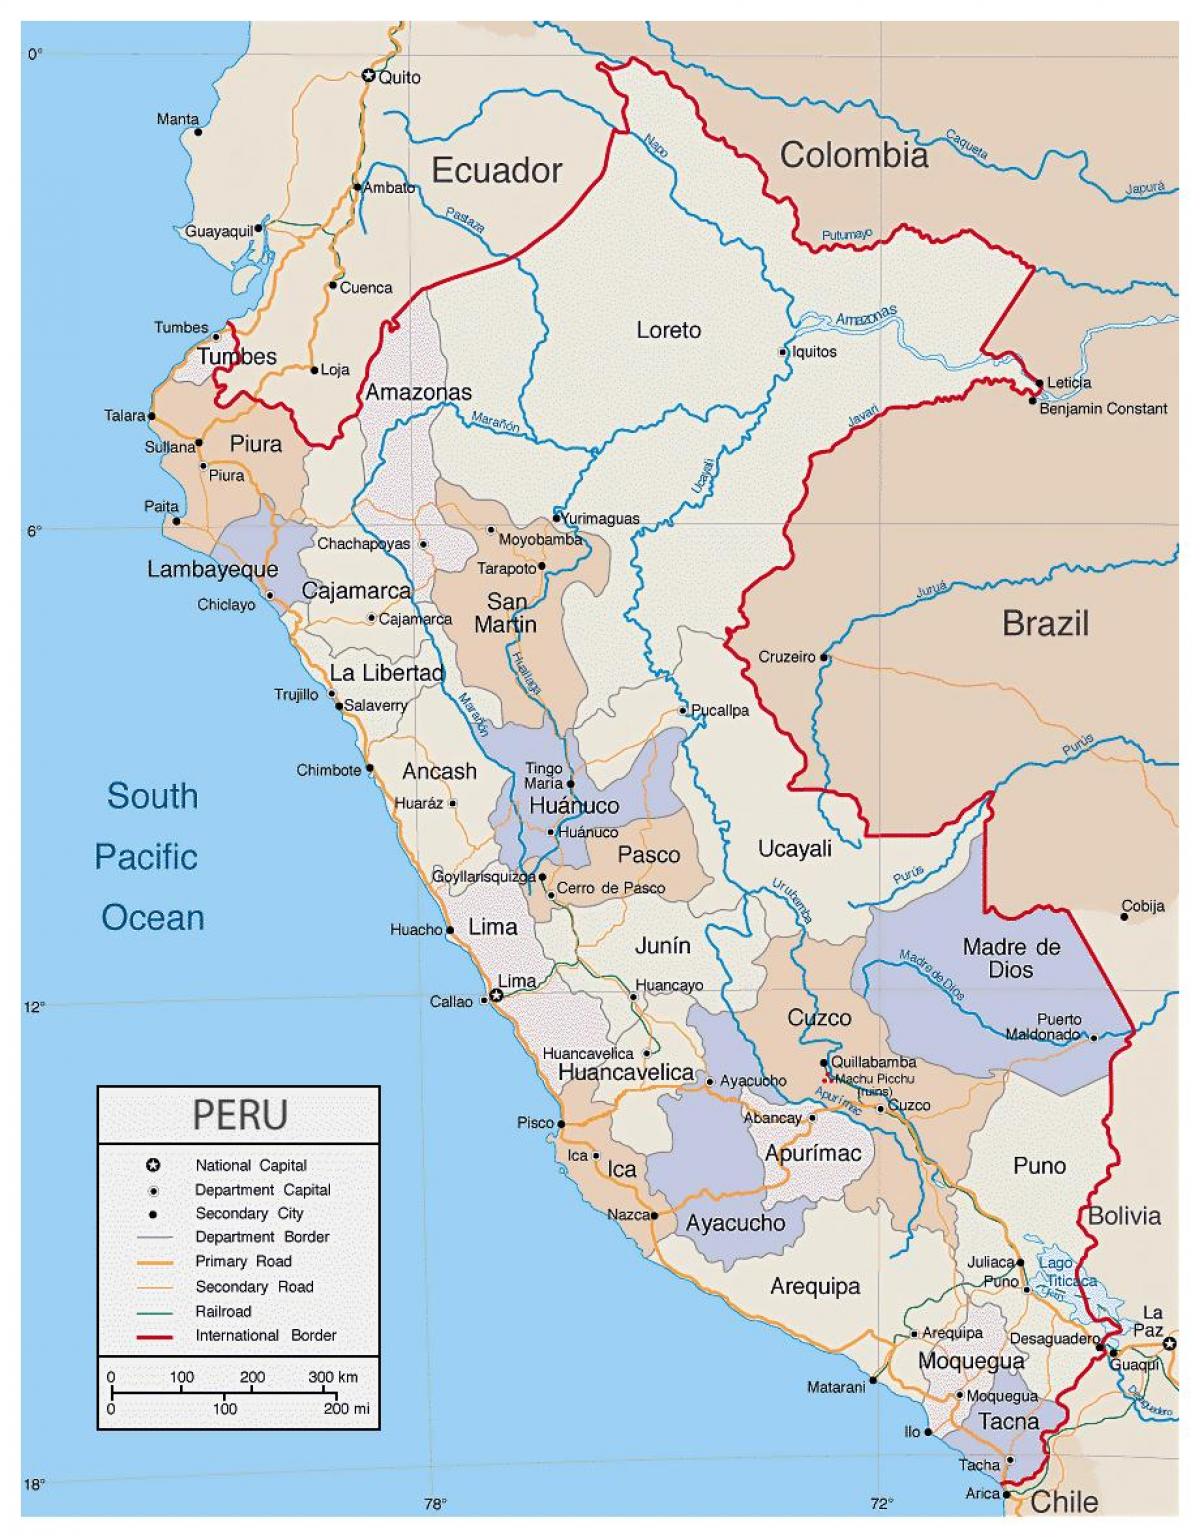 žemėlapis detalus planas Peru